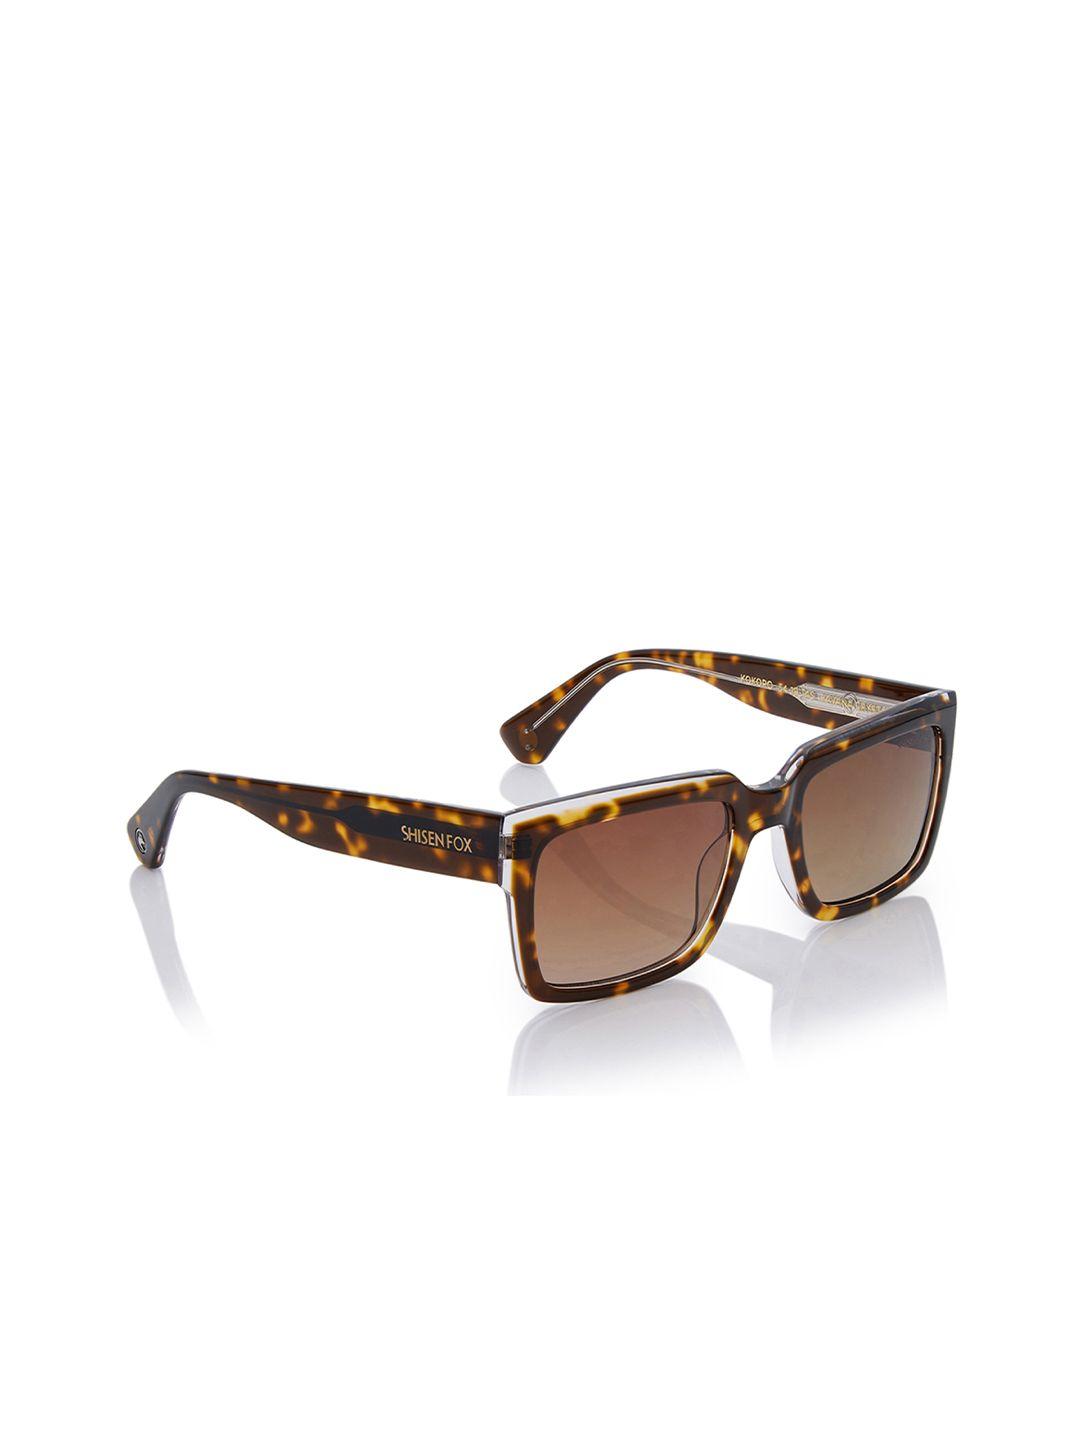 shisen fox unisex rectangle sunglasses with uv protected lens